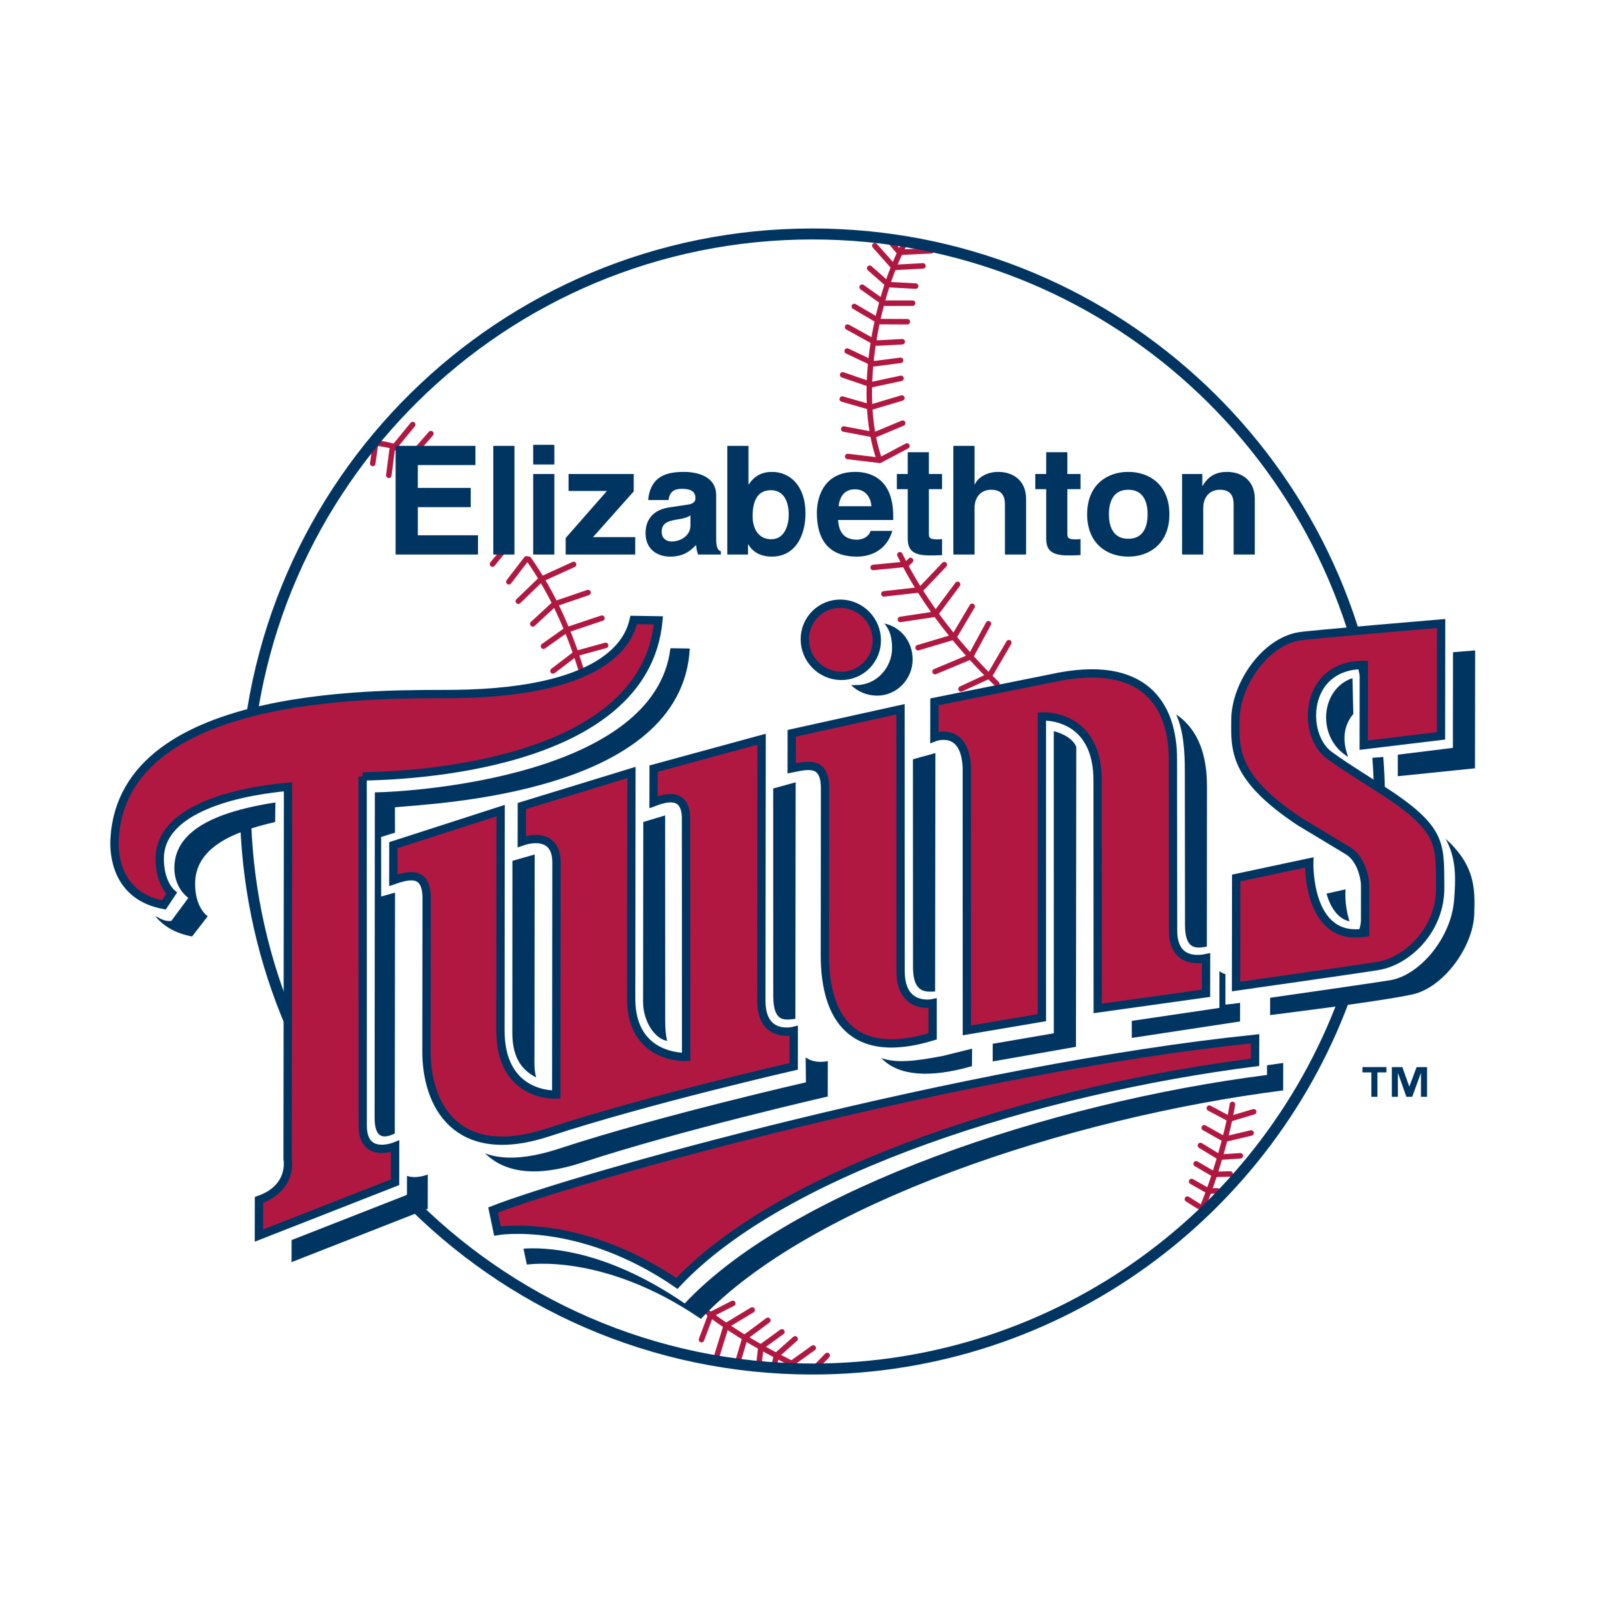 Elizabethton Twins Logo